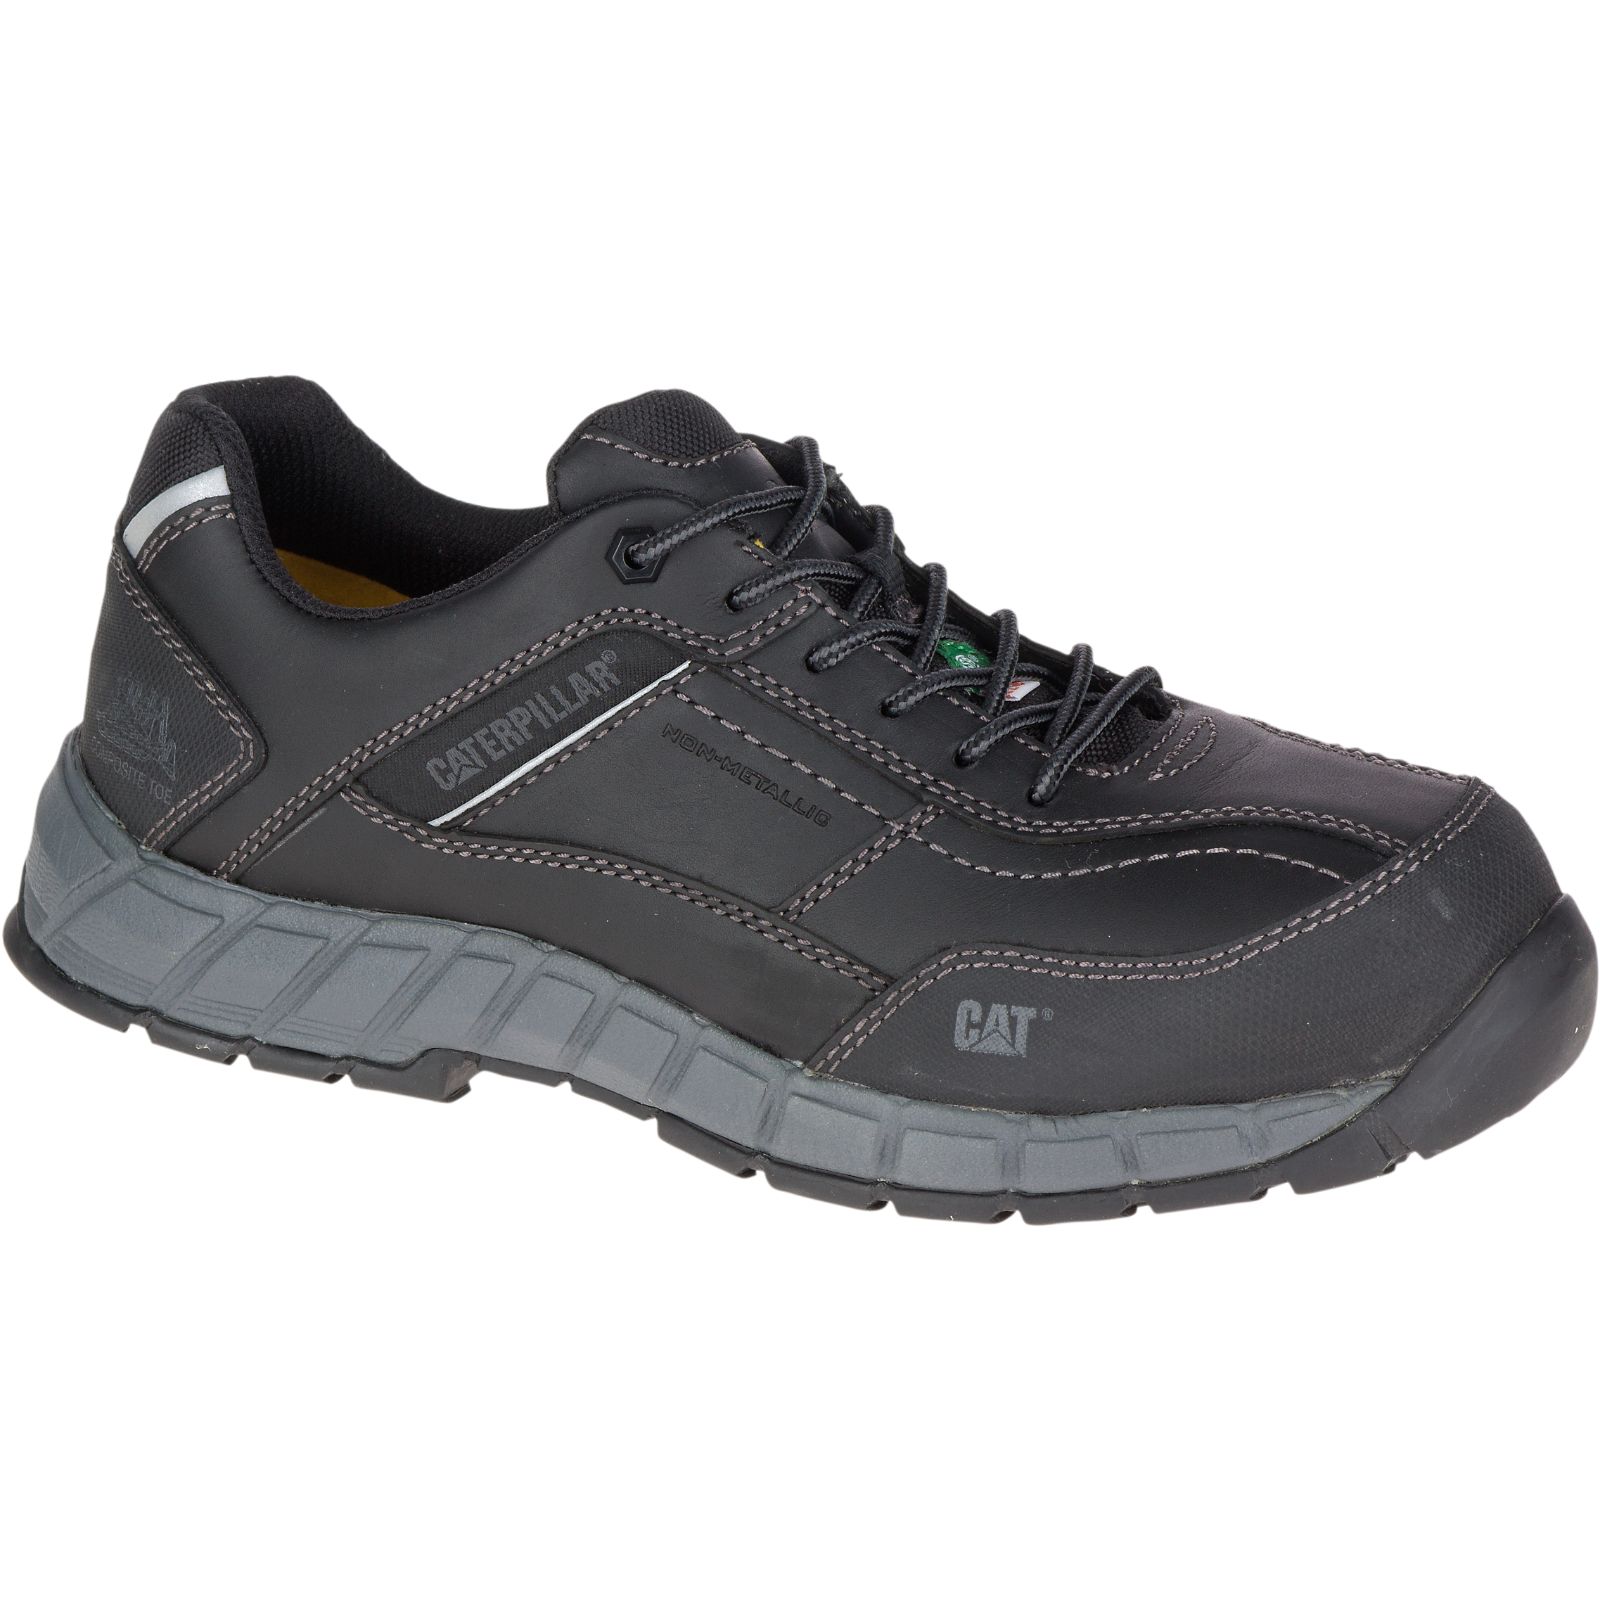 Black Caterpillar Streamline Leather Csa Composite Toe Men's Work Shoes | Cat-937560